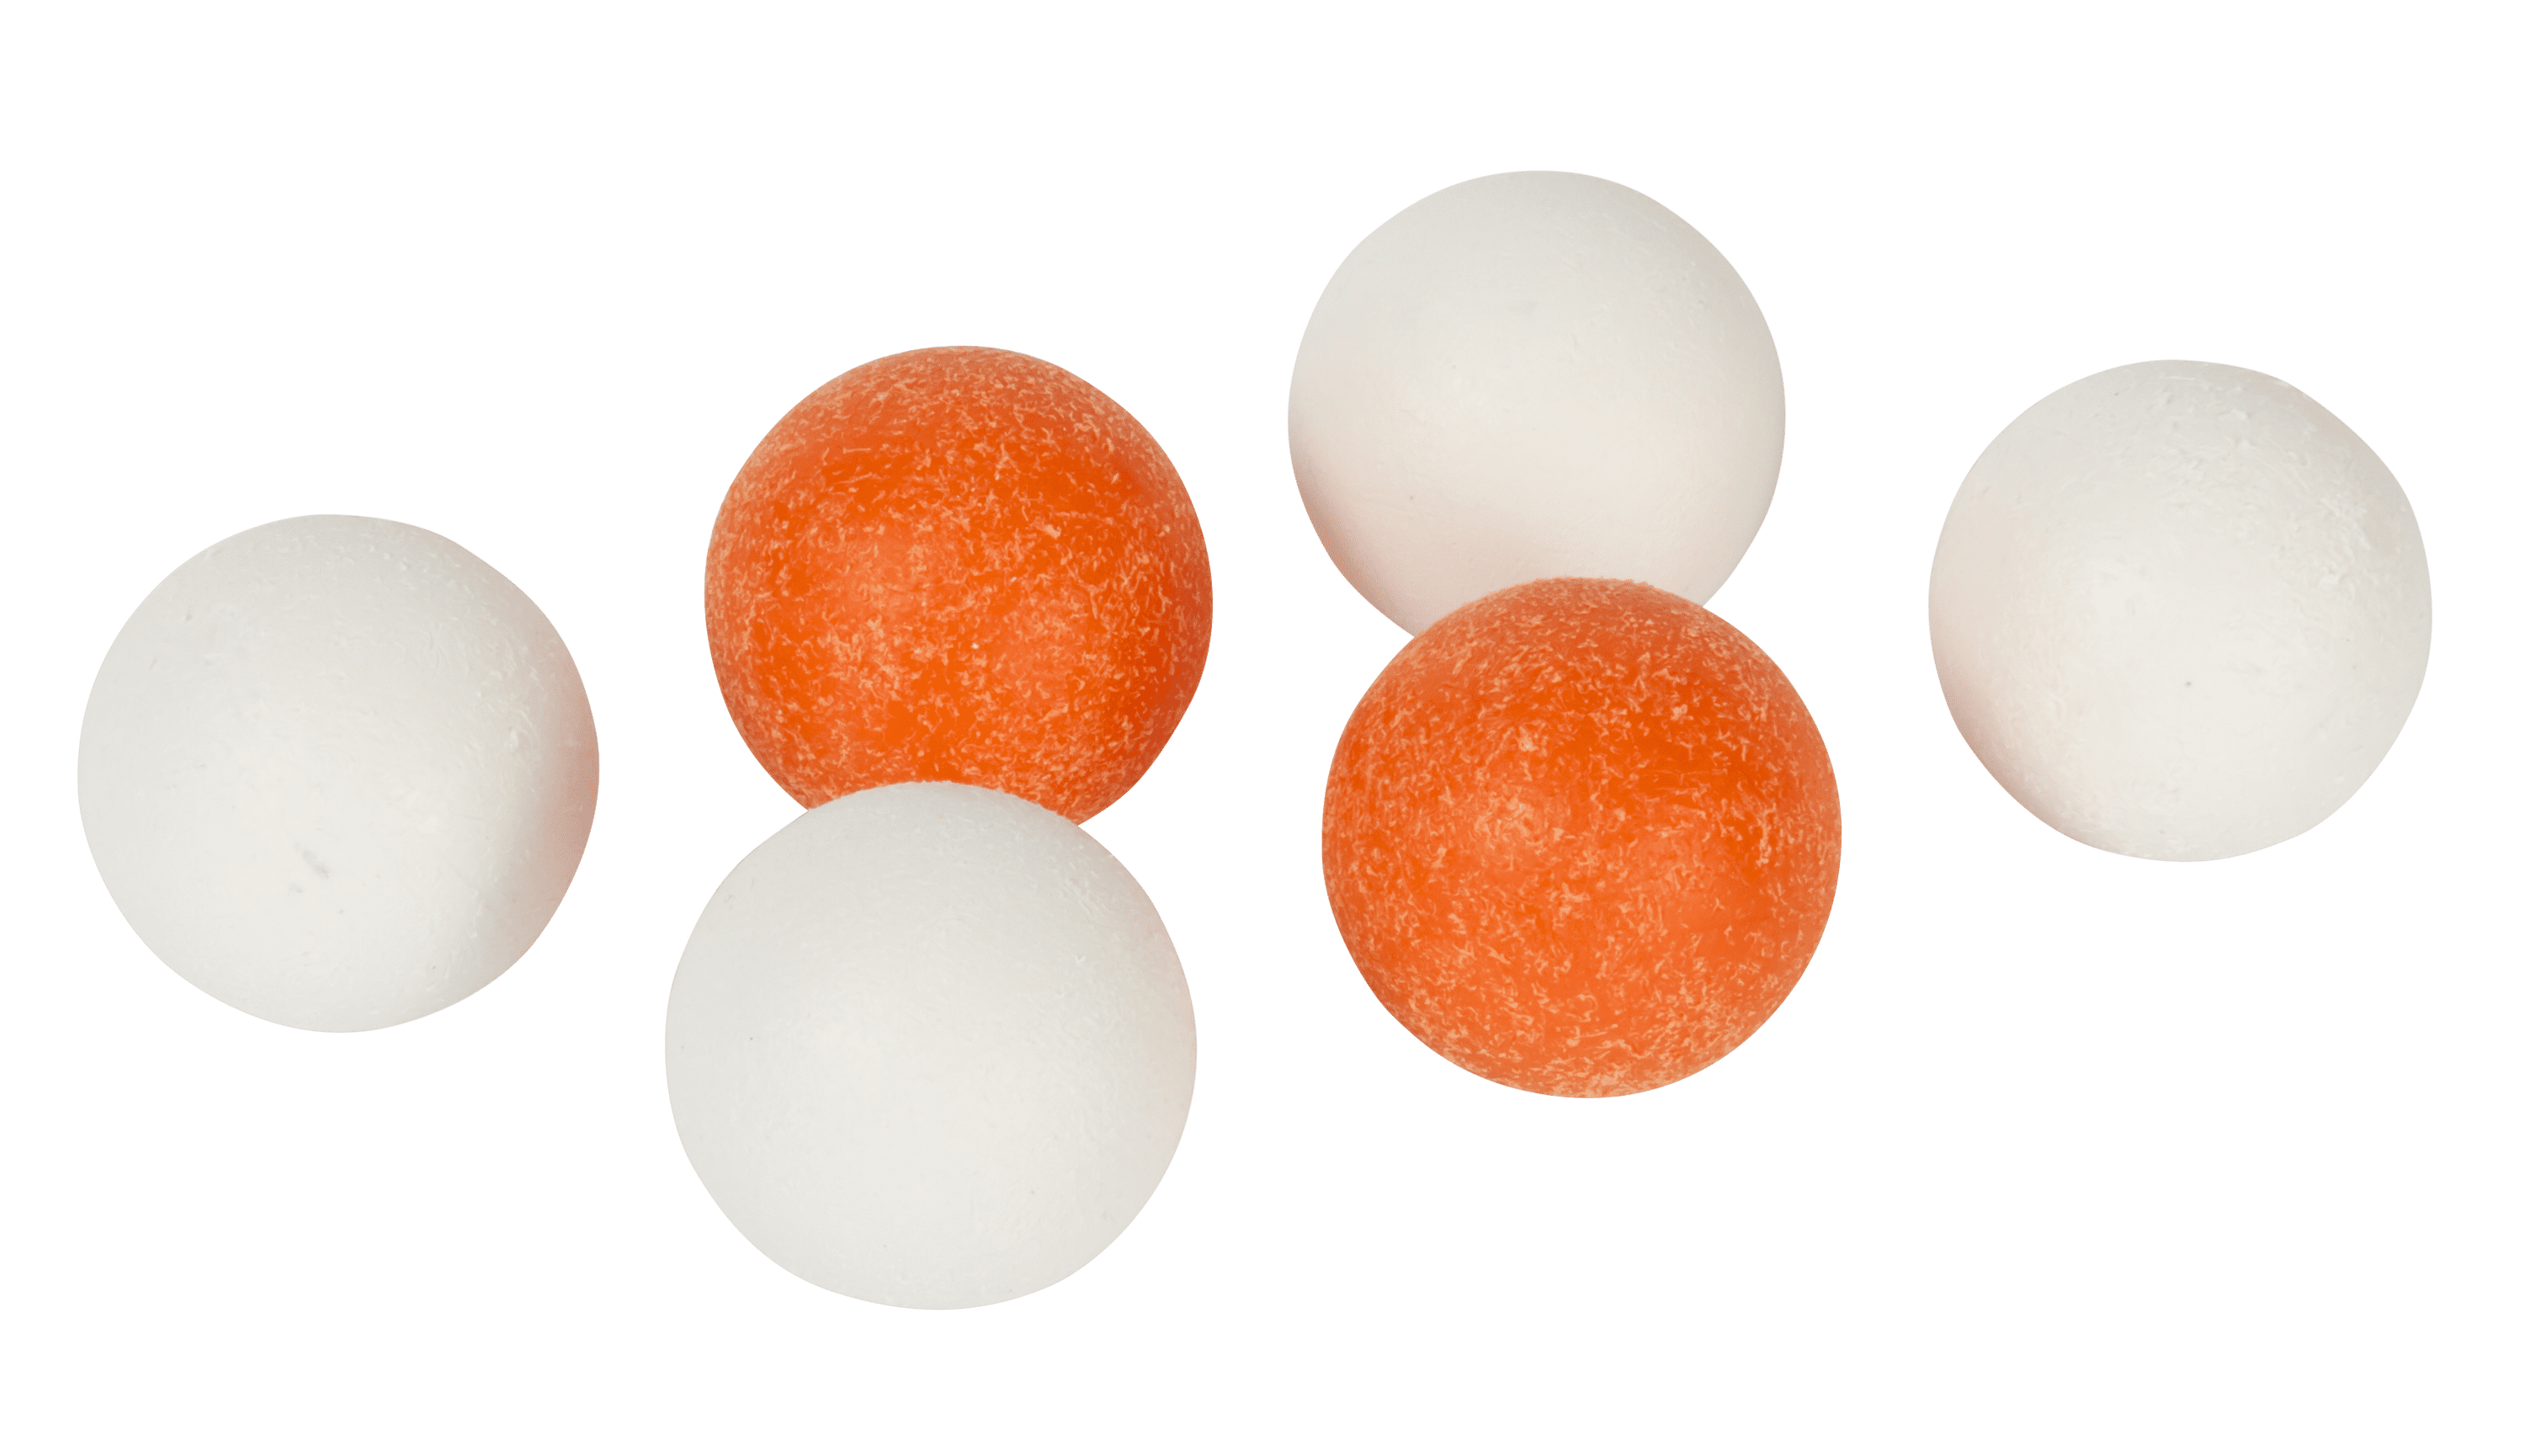 6 New Foosballs 2 orange Textured & 4 White Table Soccer Tournament Foosballs 